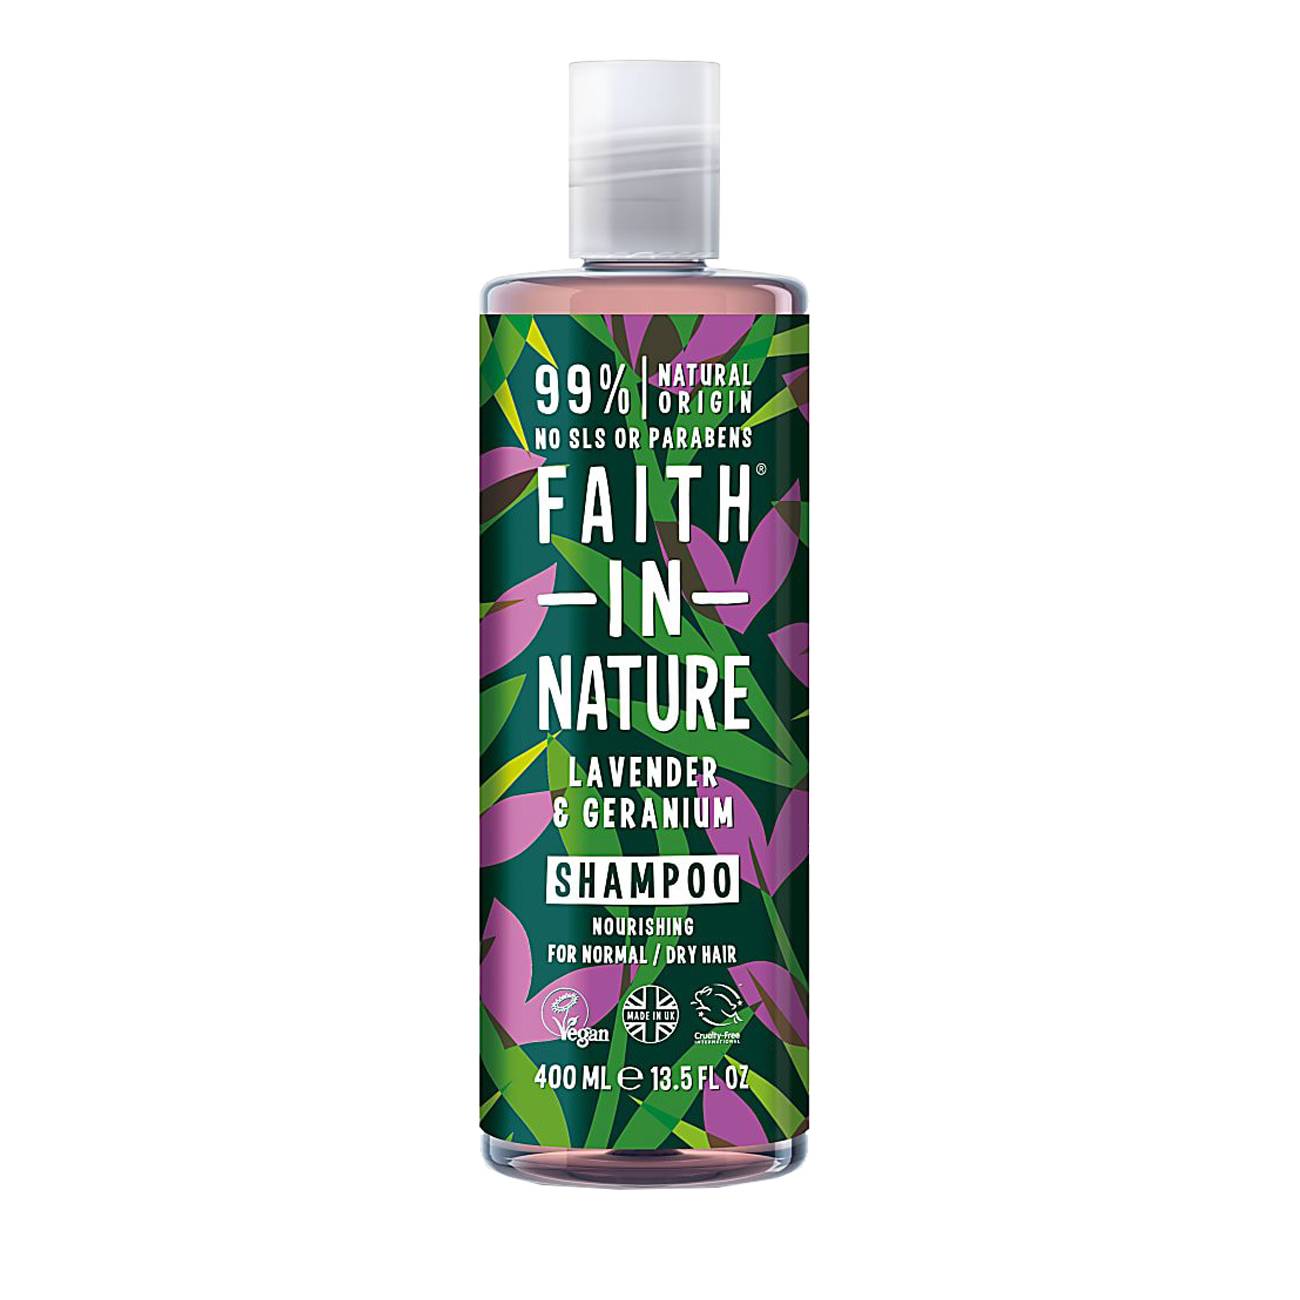 Lavander & Geranium Shampoo 400 ml Faith in Nature bestvalue.eu imagine noua